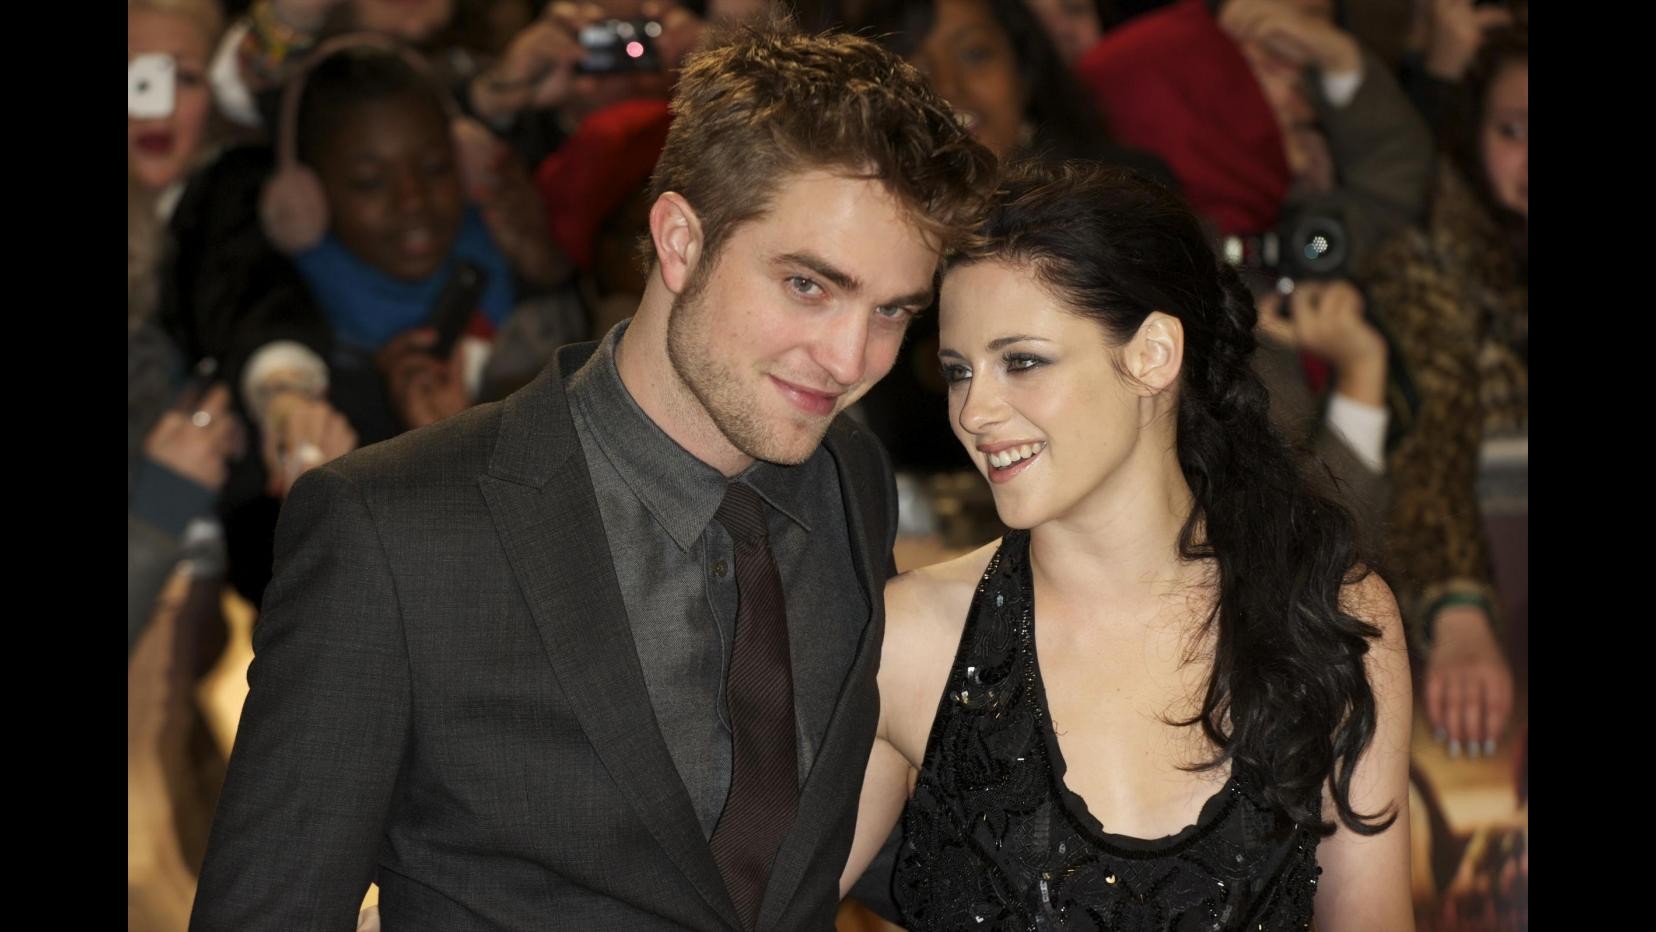 Scena d’amore Kristen Stewart e Pattinson troppo spinta, censurata